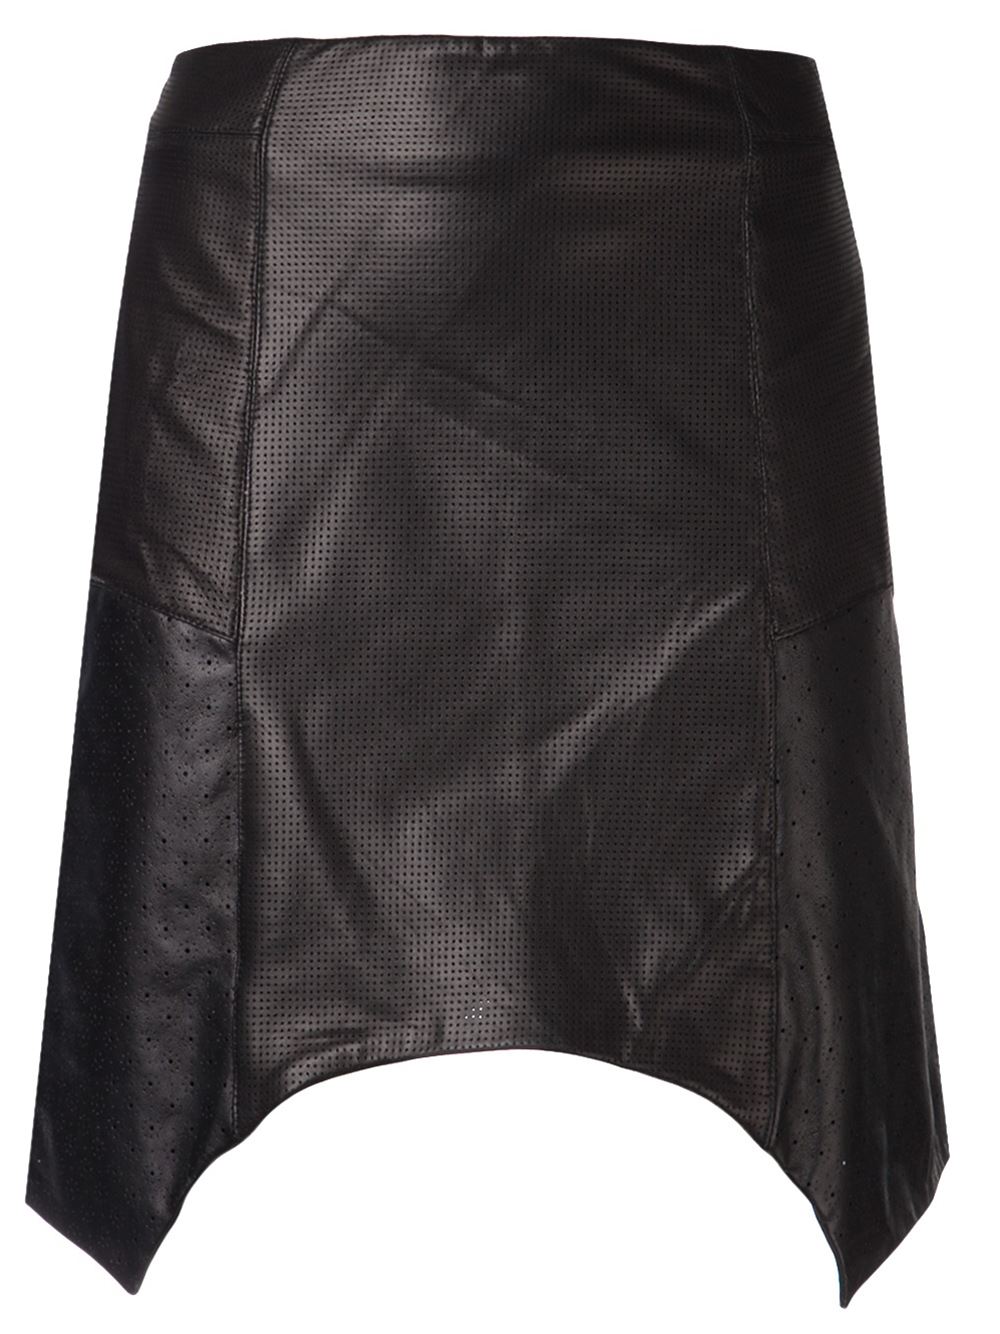 Black lambskin asymmetrical skirt from Tess Giberson